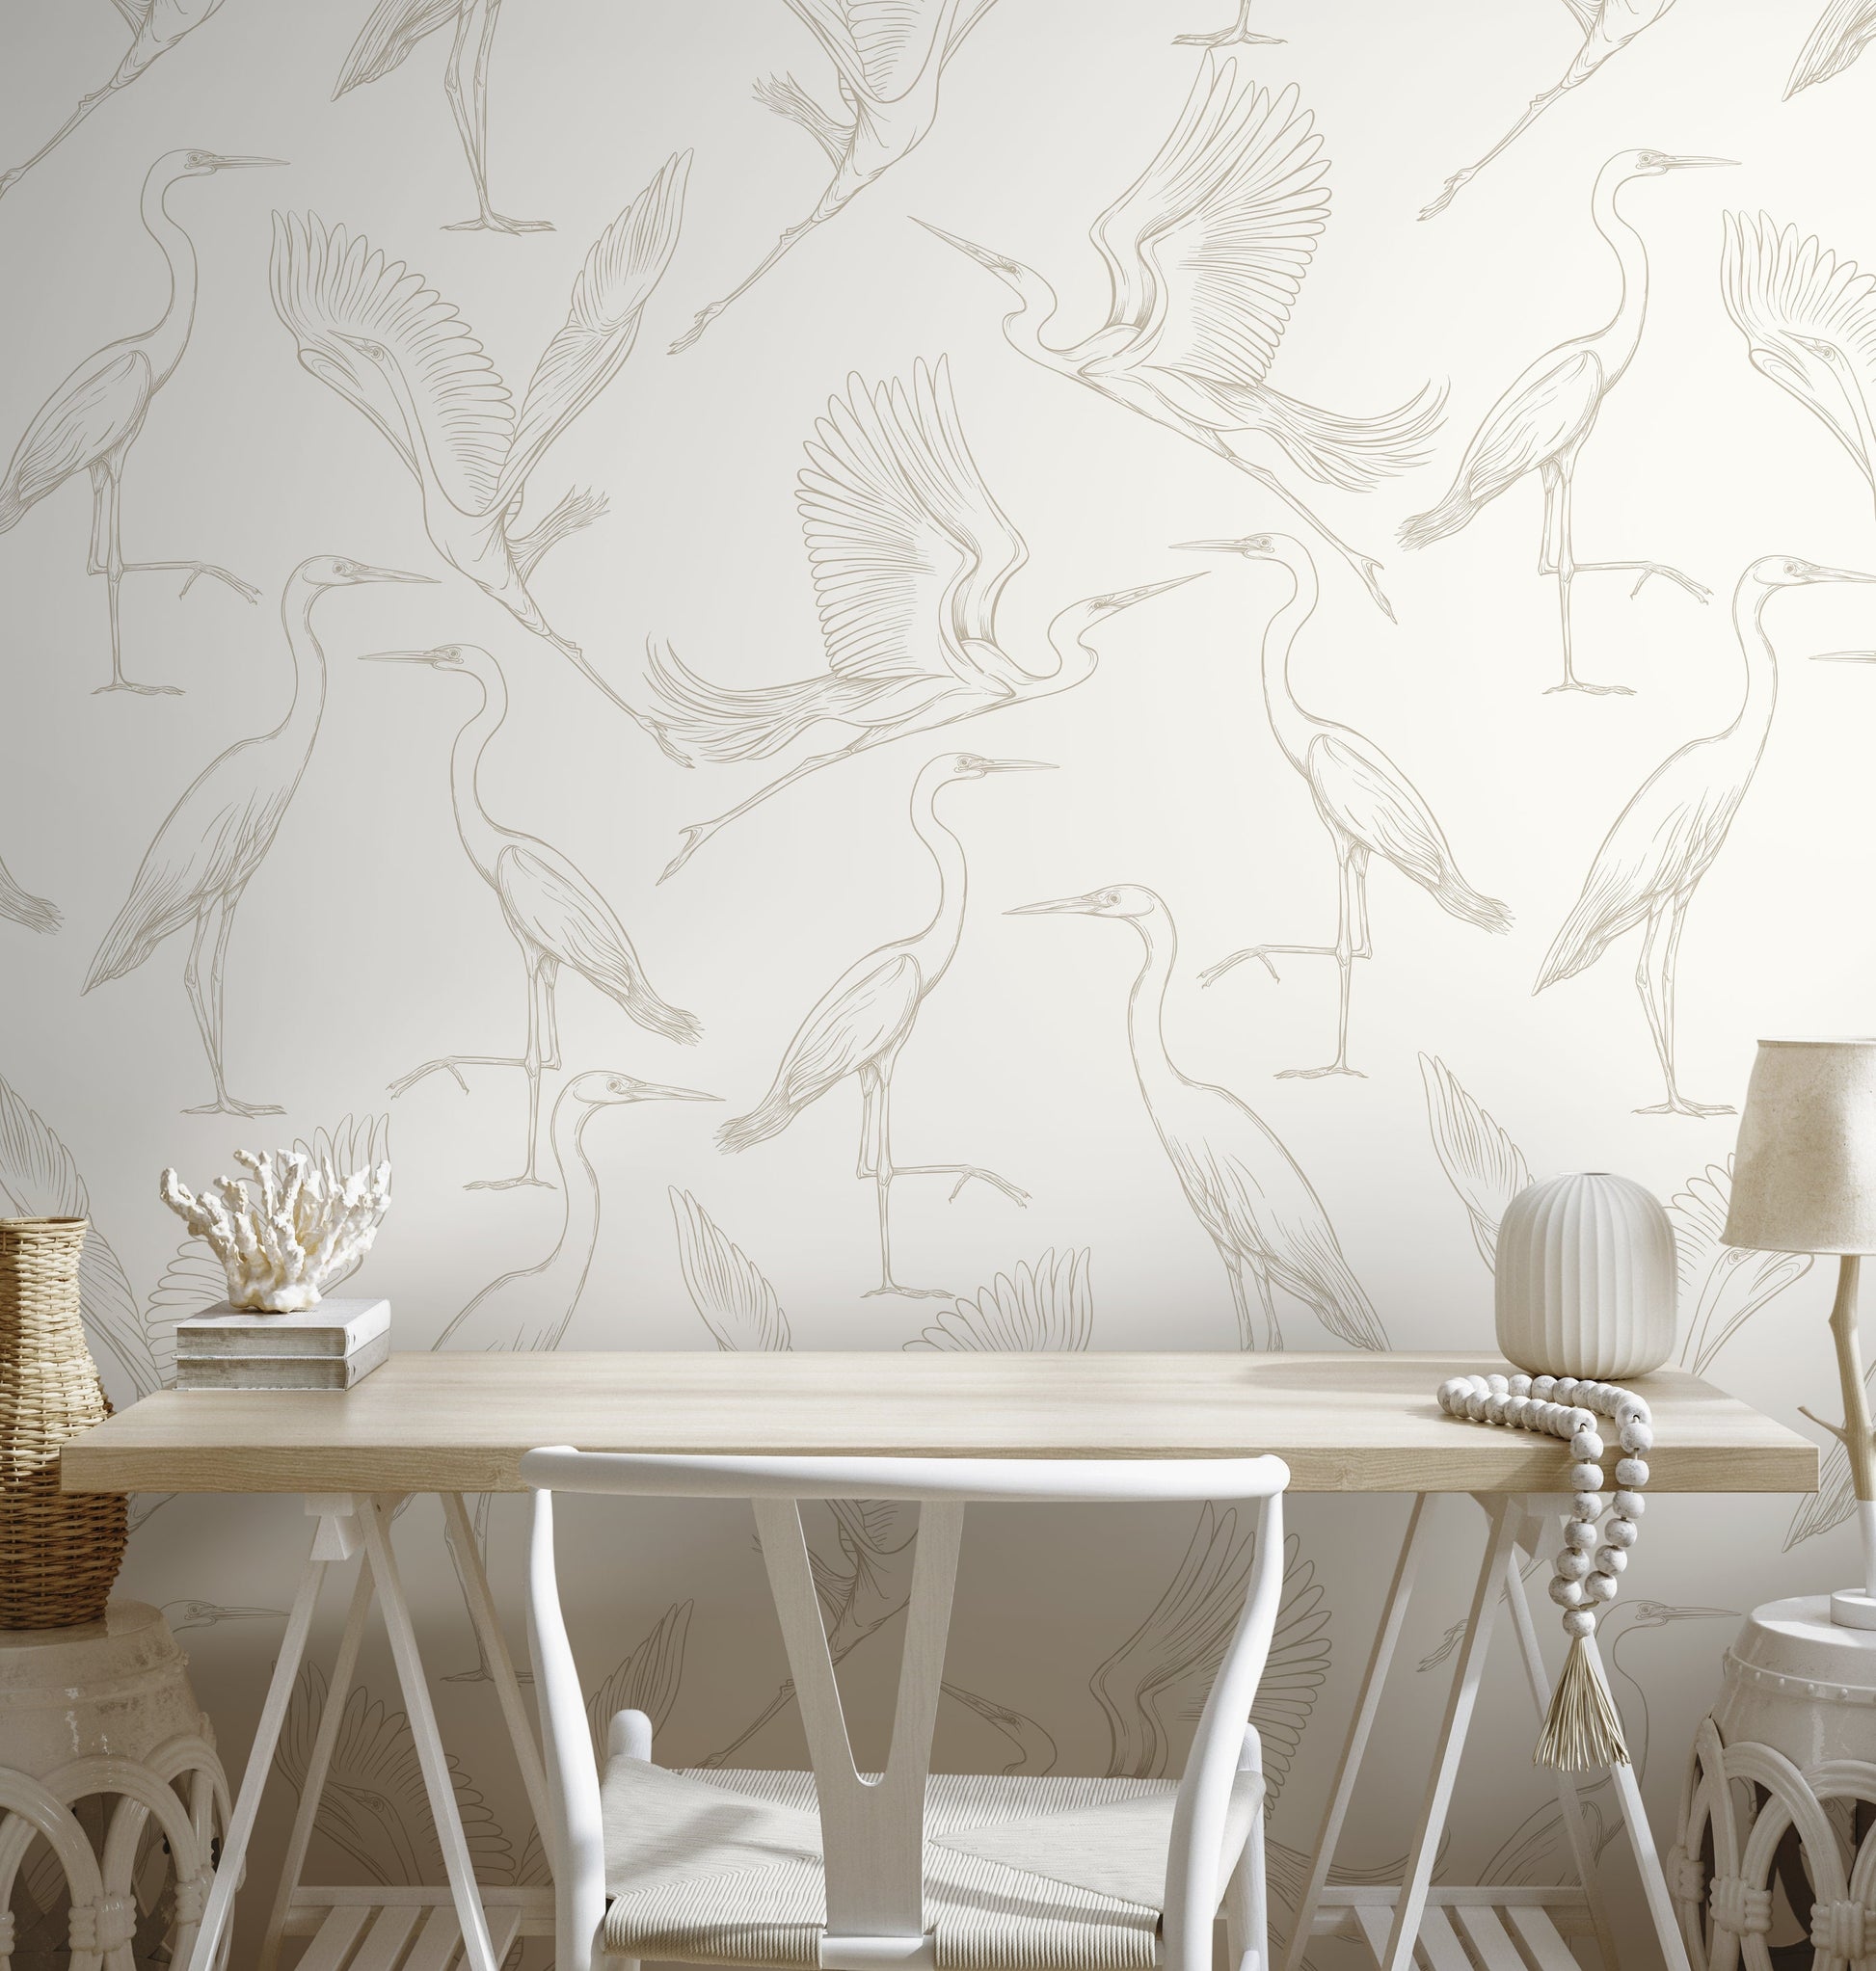 Neutral Boho Crane Birds Wallpaper / Peel and Stick Wallpaper Removable Wallpaper Home Decor Wall Art Wall Decor Room Decor - D103